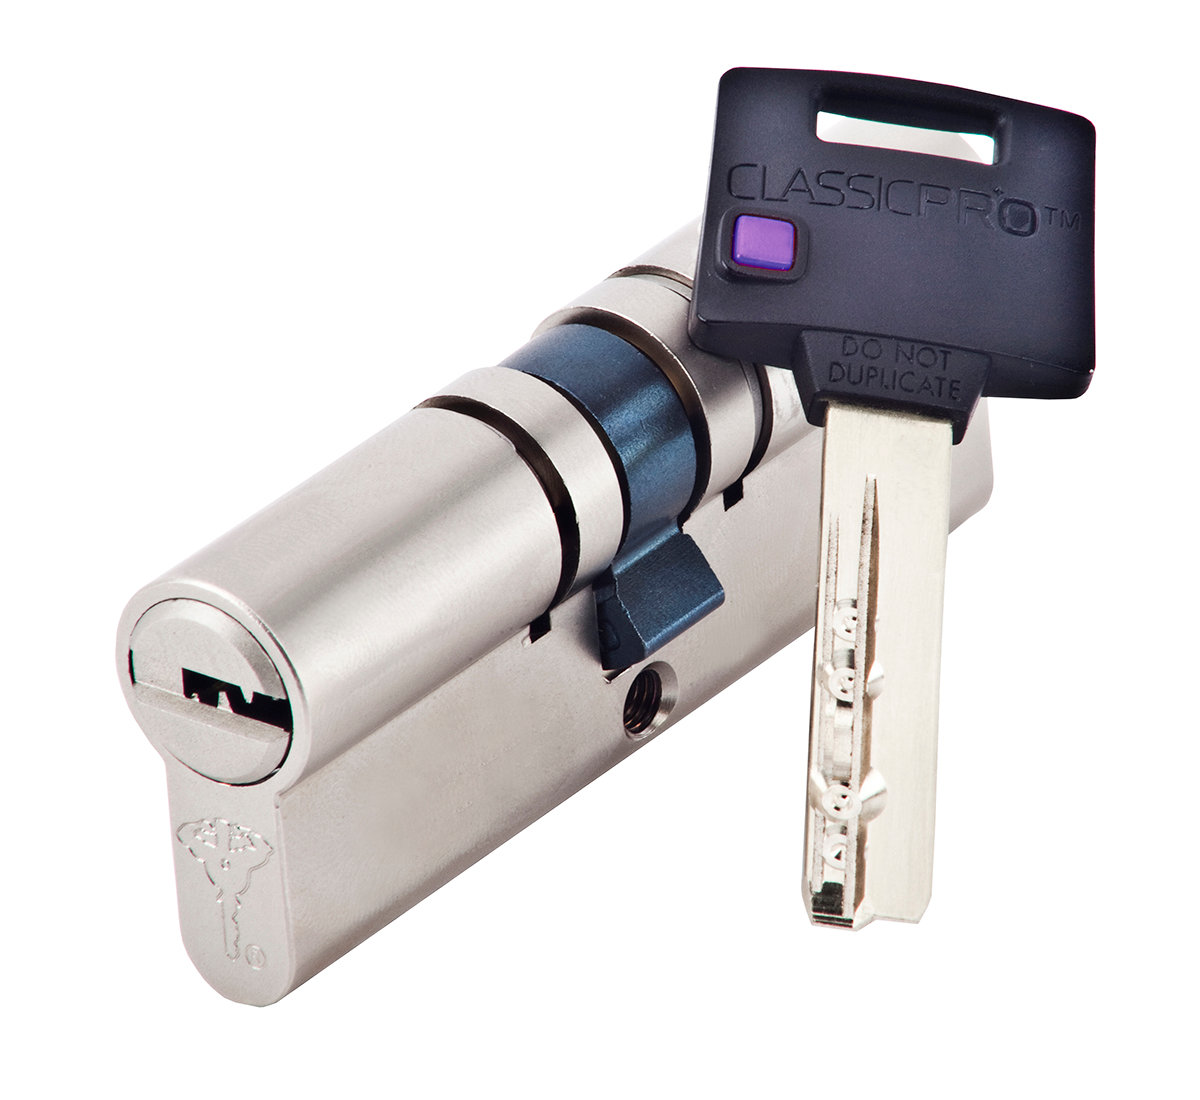 Цилиндр Mul-t-Lock Classic Pro ключ-ключ (размер 38x38 мм) - Никель, Шестеренка (3 ключа)